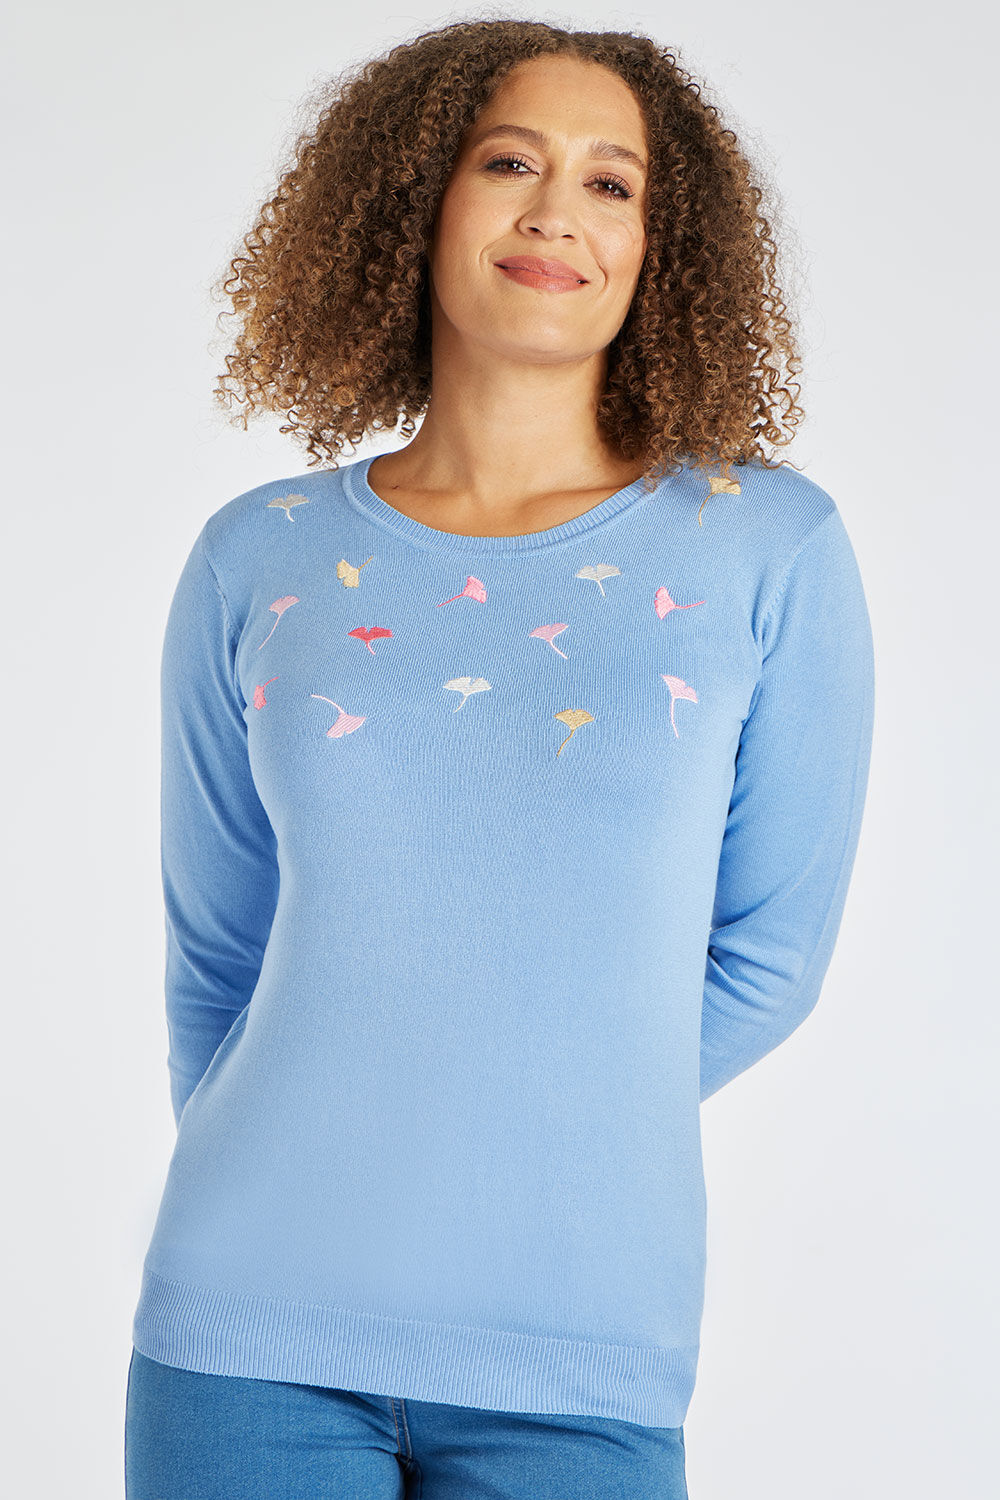 bonmarche pale blue embroidered design jumper, size: 10